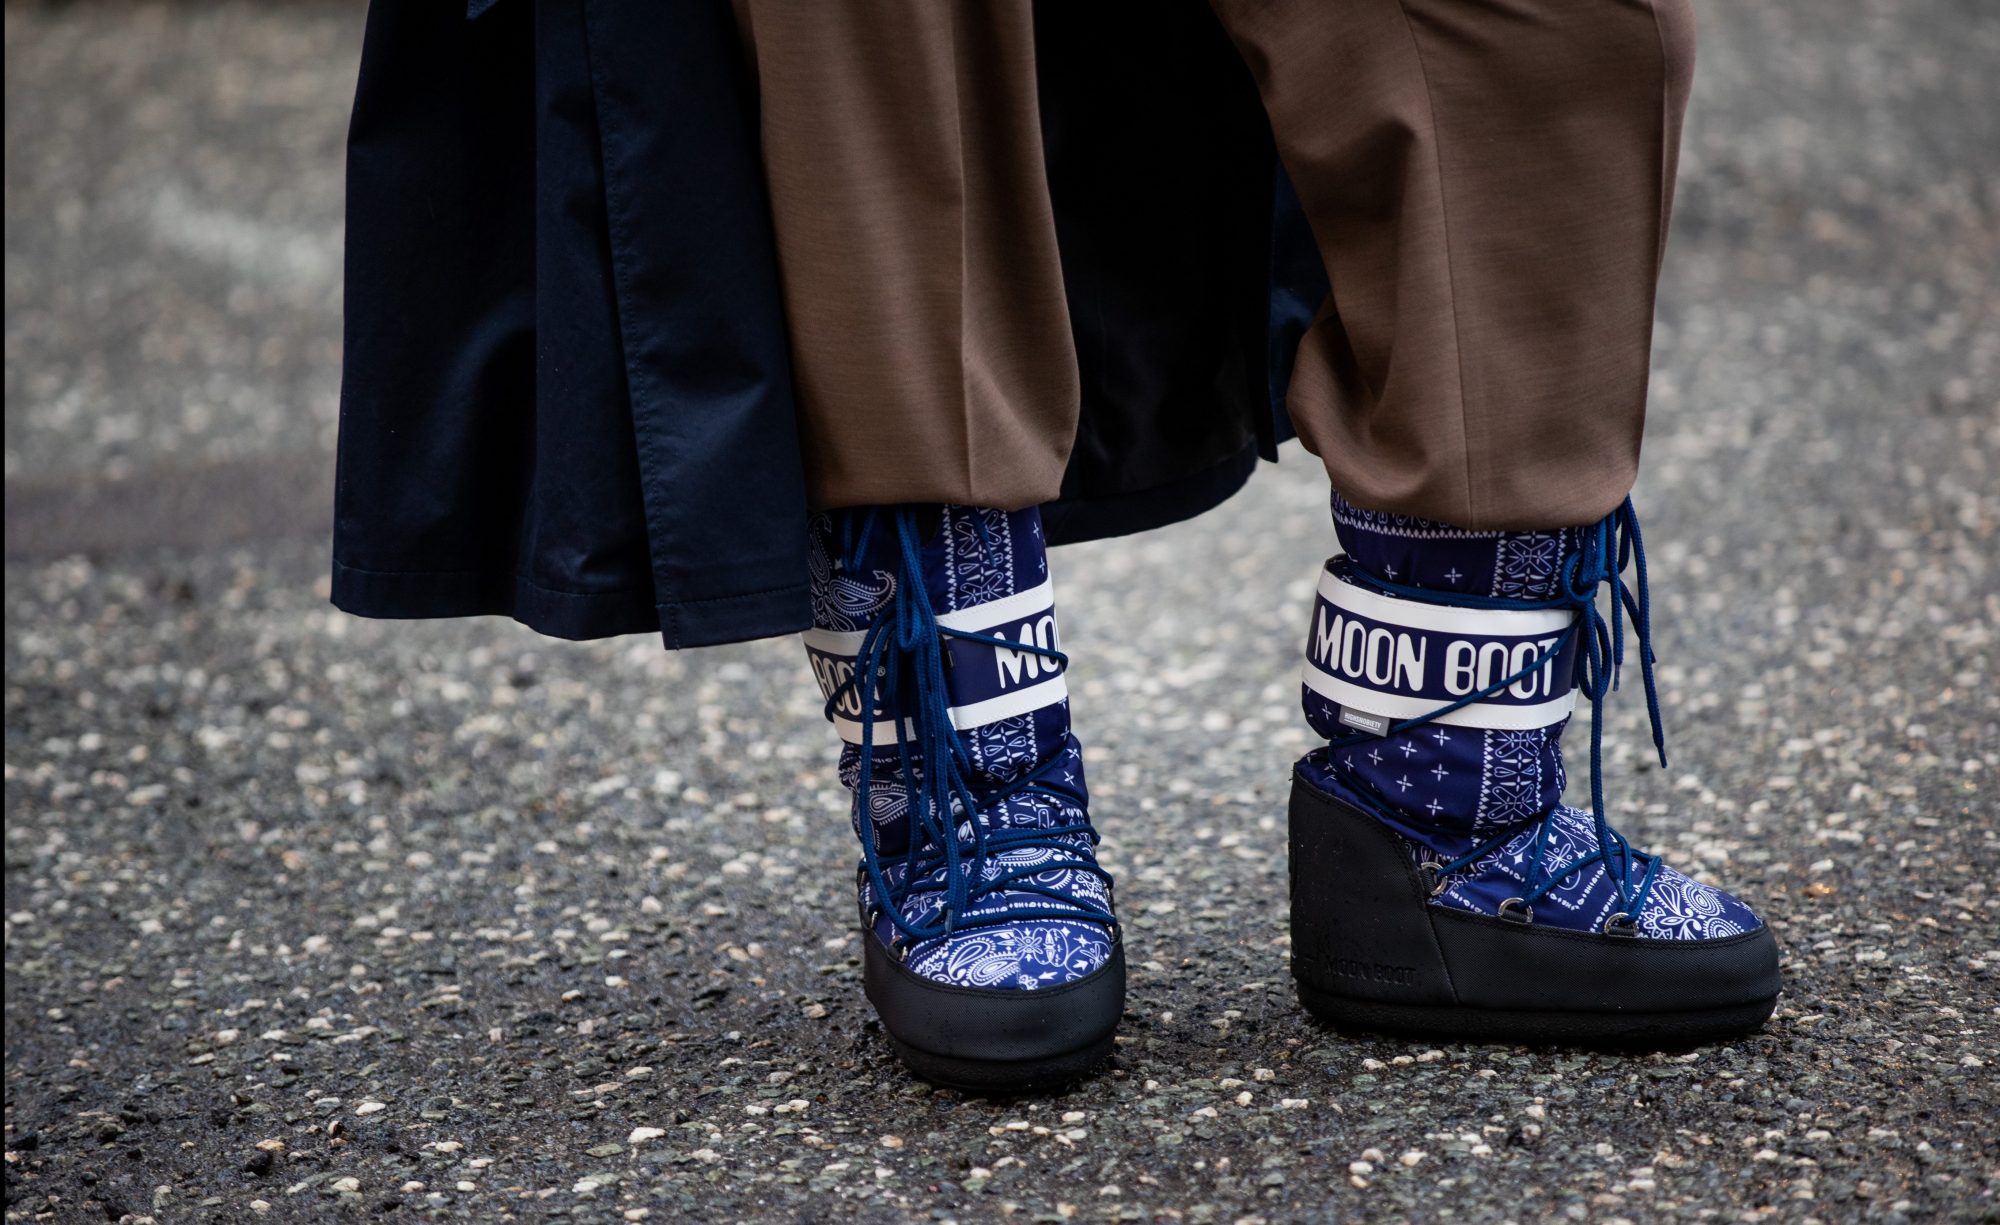 Moon boots: Πώς να φορέσεις το trend του φετινού χειμώνα ακόμα και όταν δεν χιονίζει